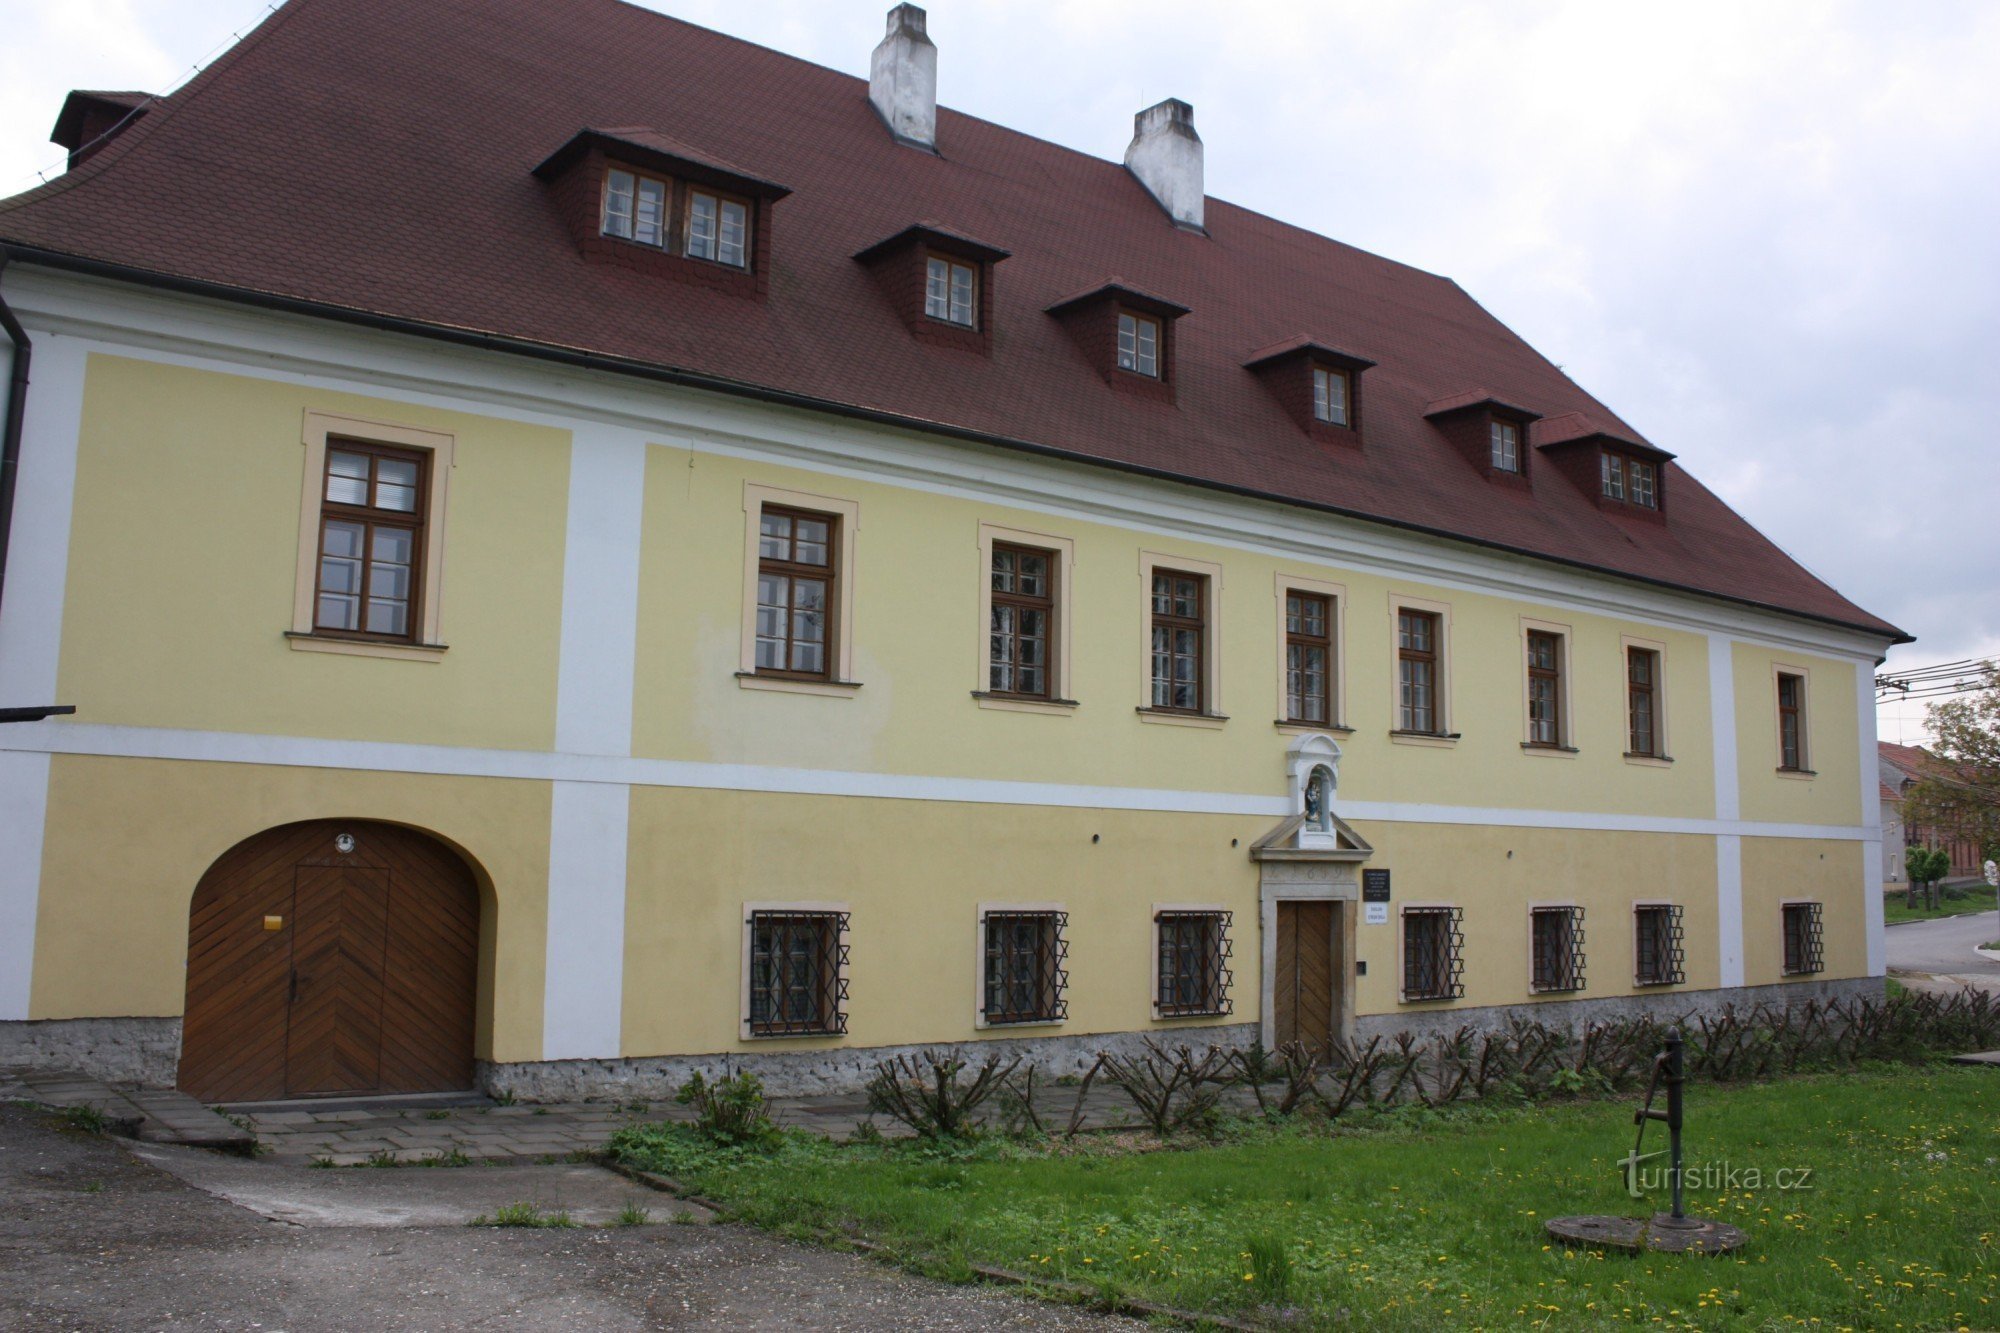 Župnijska stavba v Vřesovicah pri Prostějovu